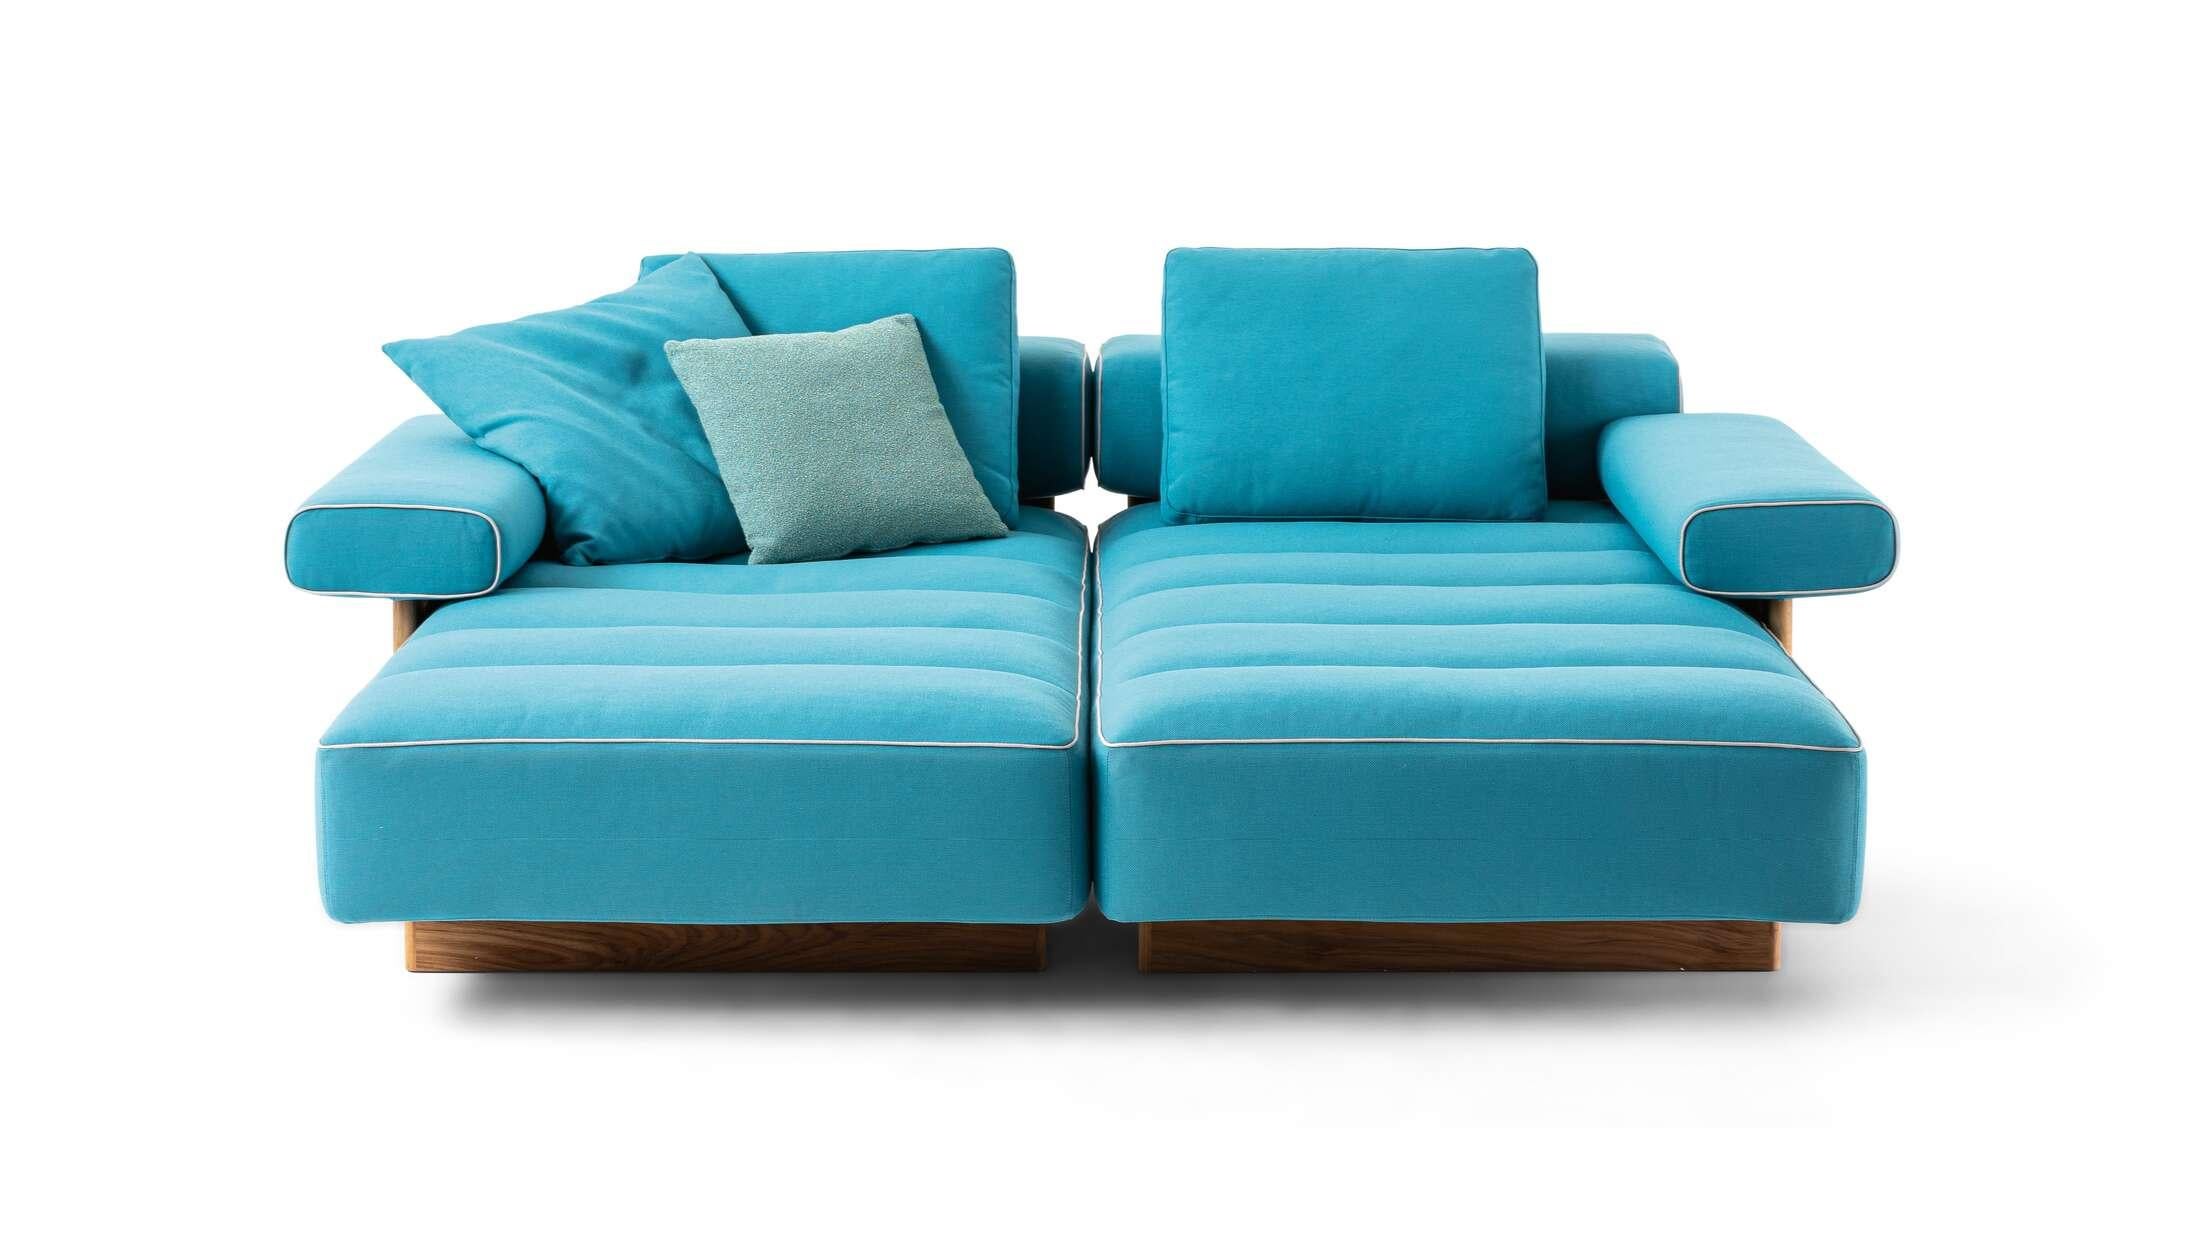 Rodolfo Dordoni 'Sail Out' Outdoor Sofa for Cassina in white, purple or blue  In New Condition For Sale In Berlin, DE